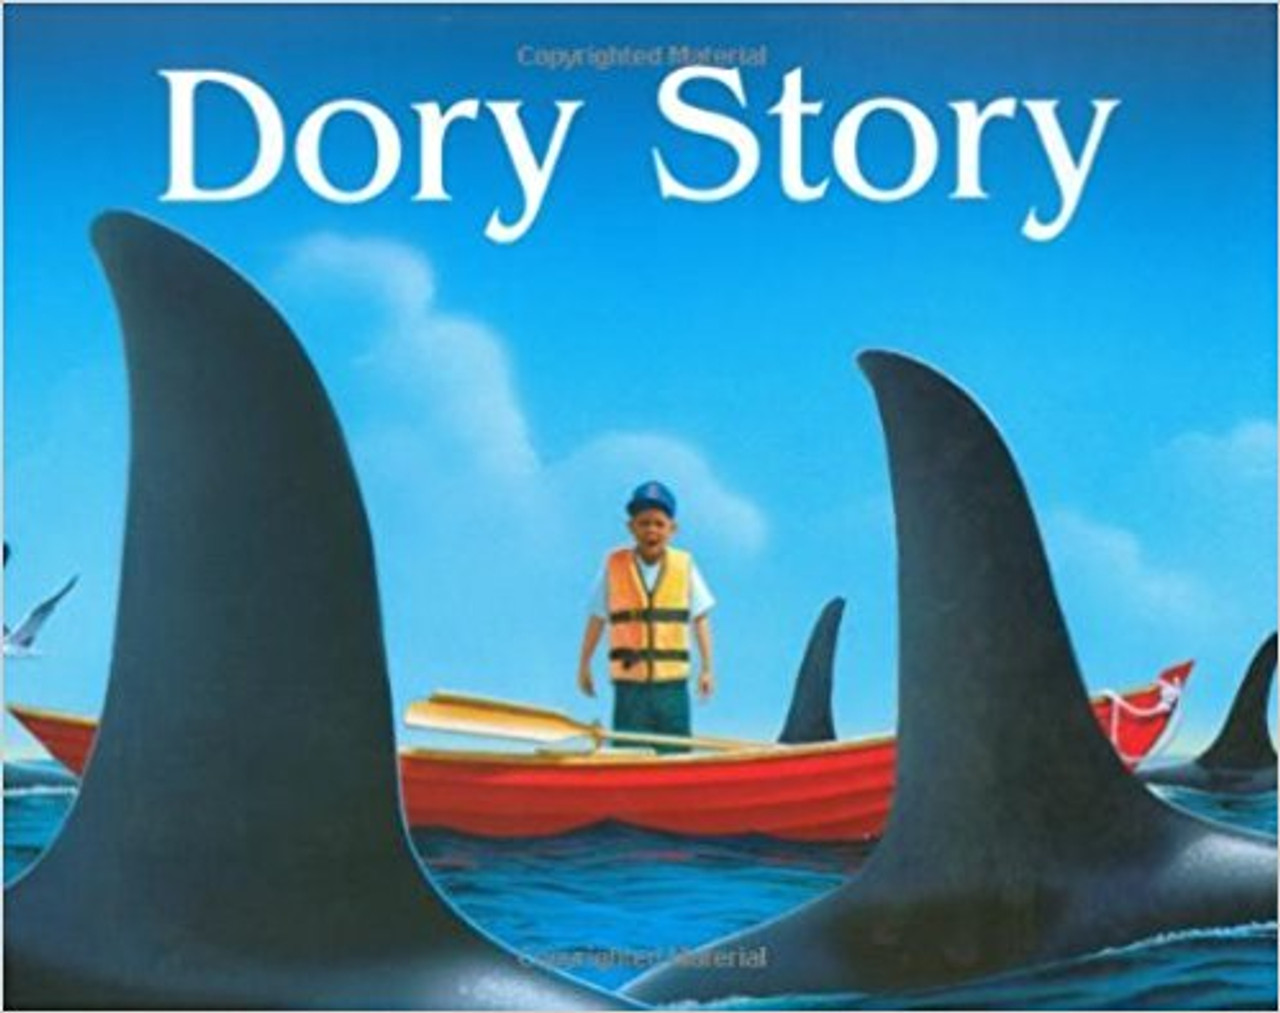 Dory Story by Deborah J Short